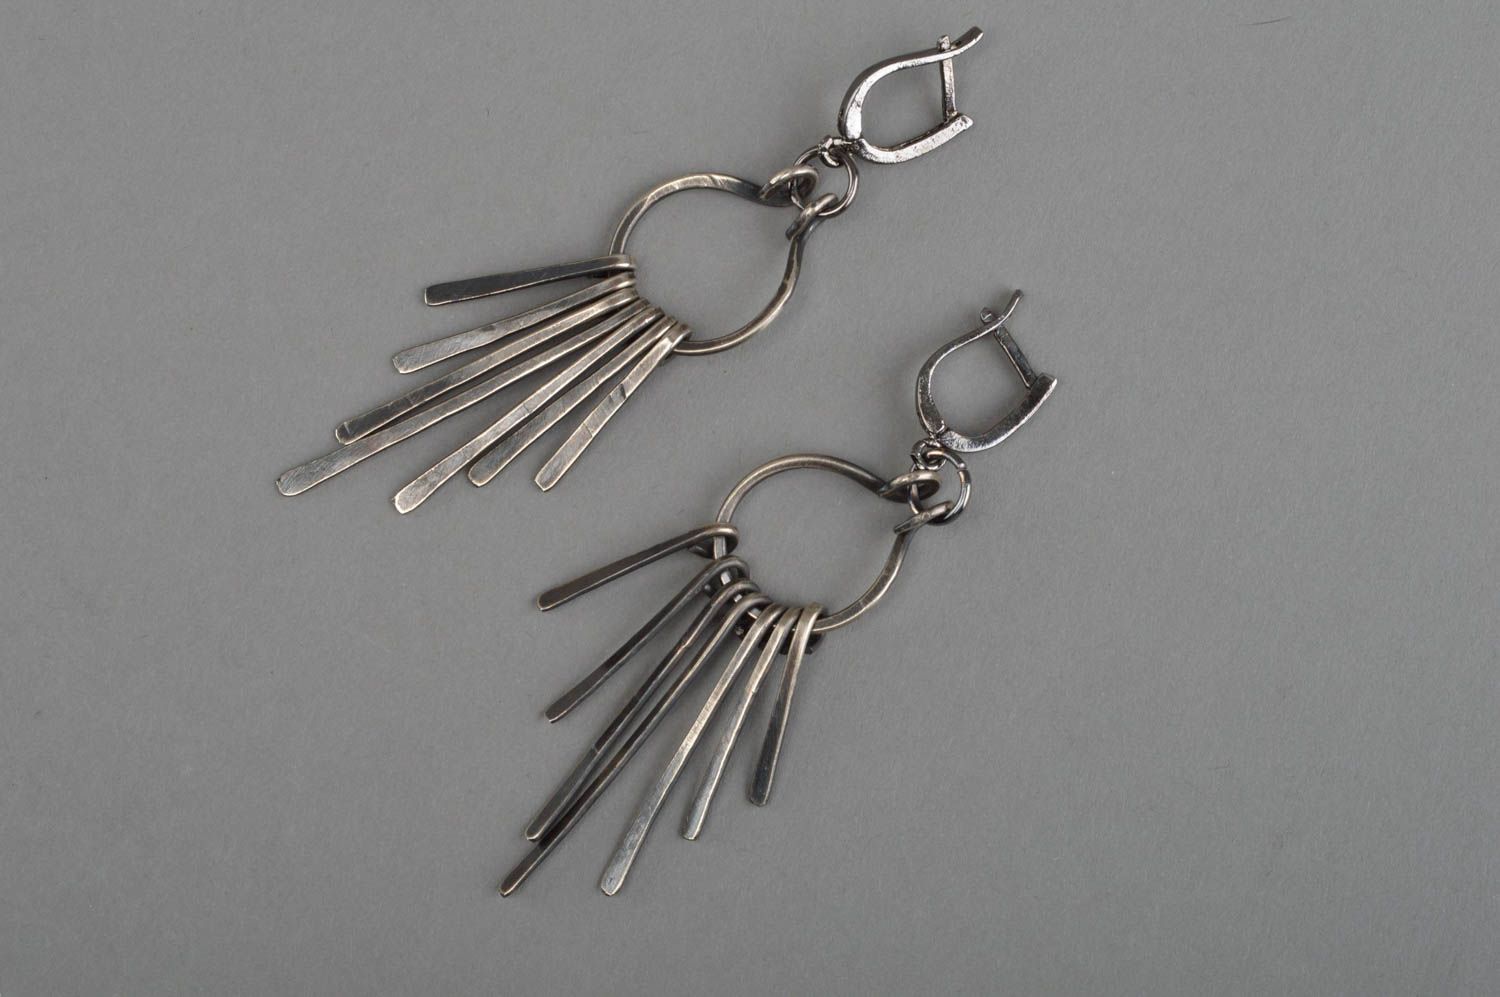 Unusual homemade metal earrings stylsih cupronickel earrings gifts for her photo 2